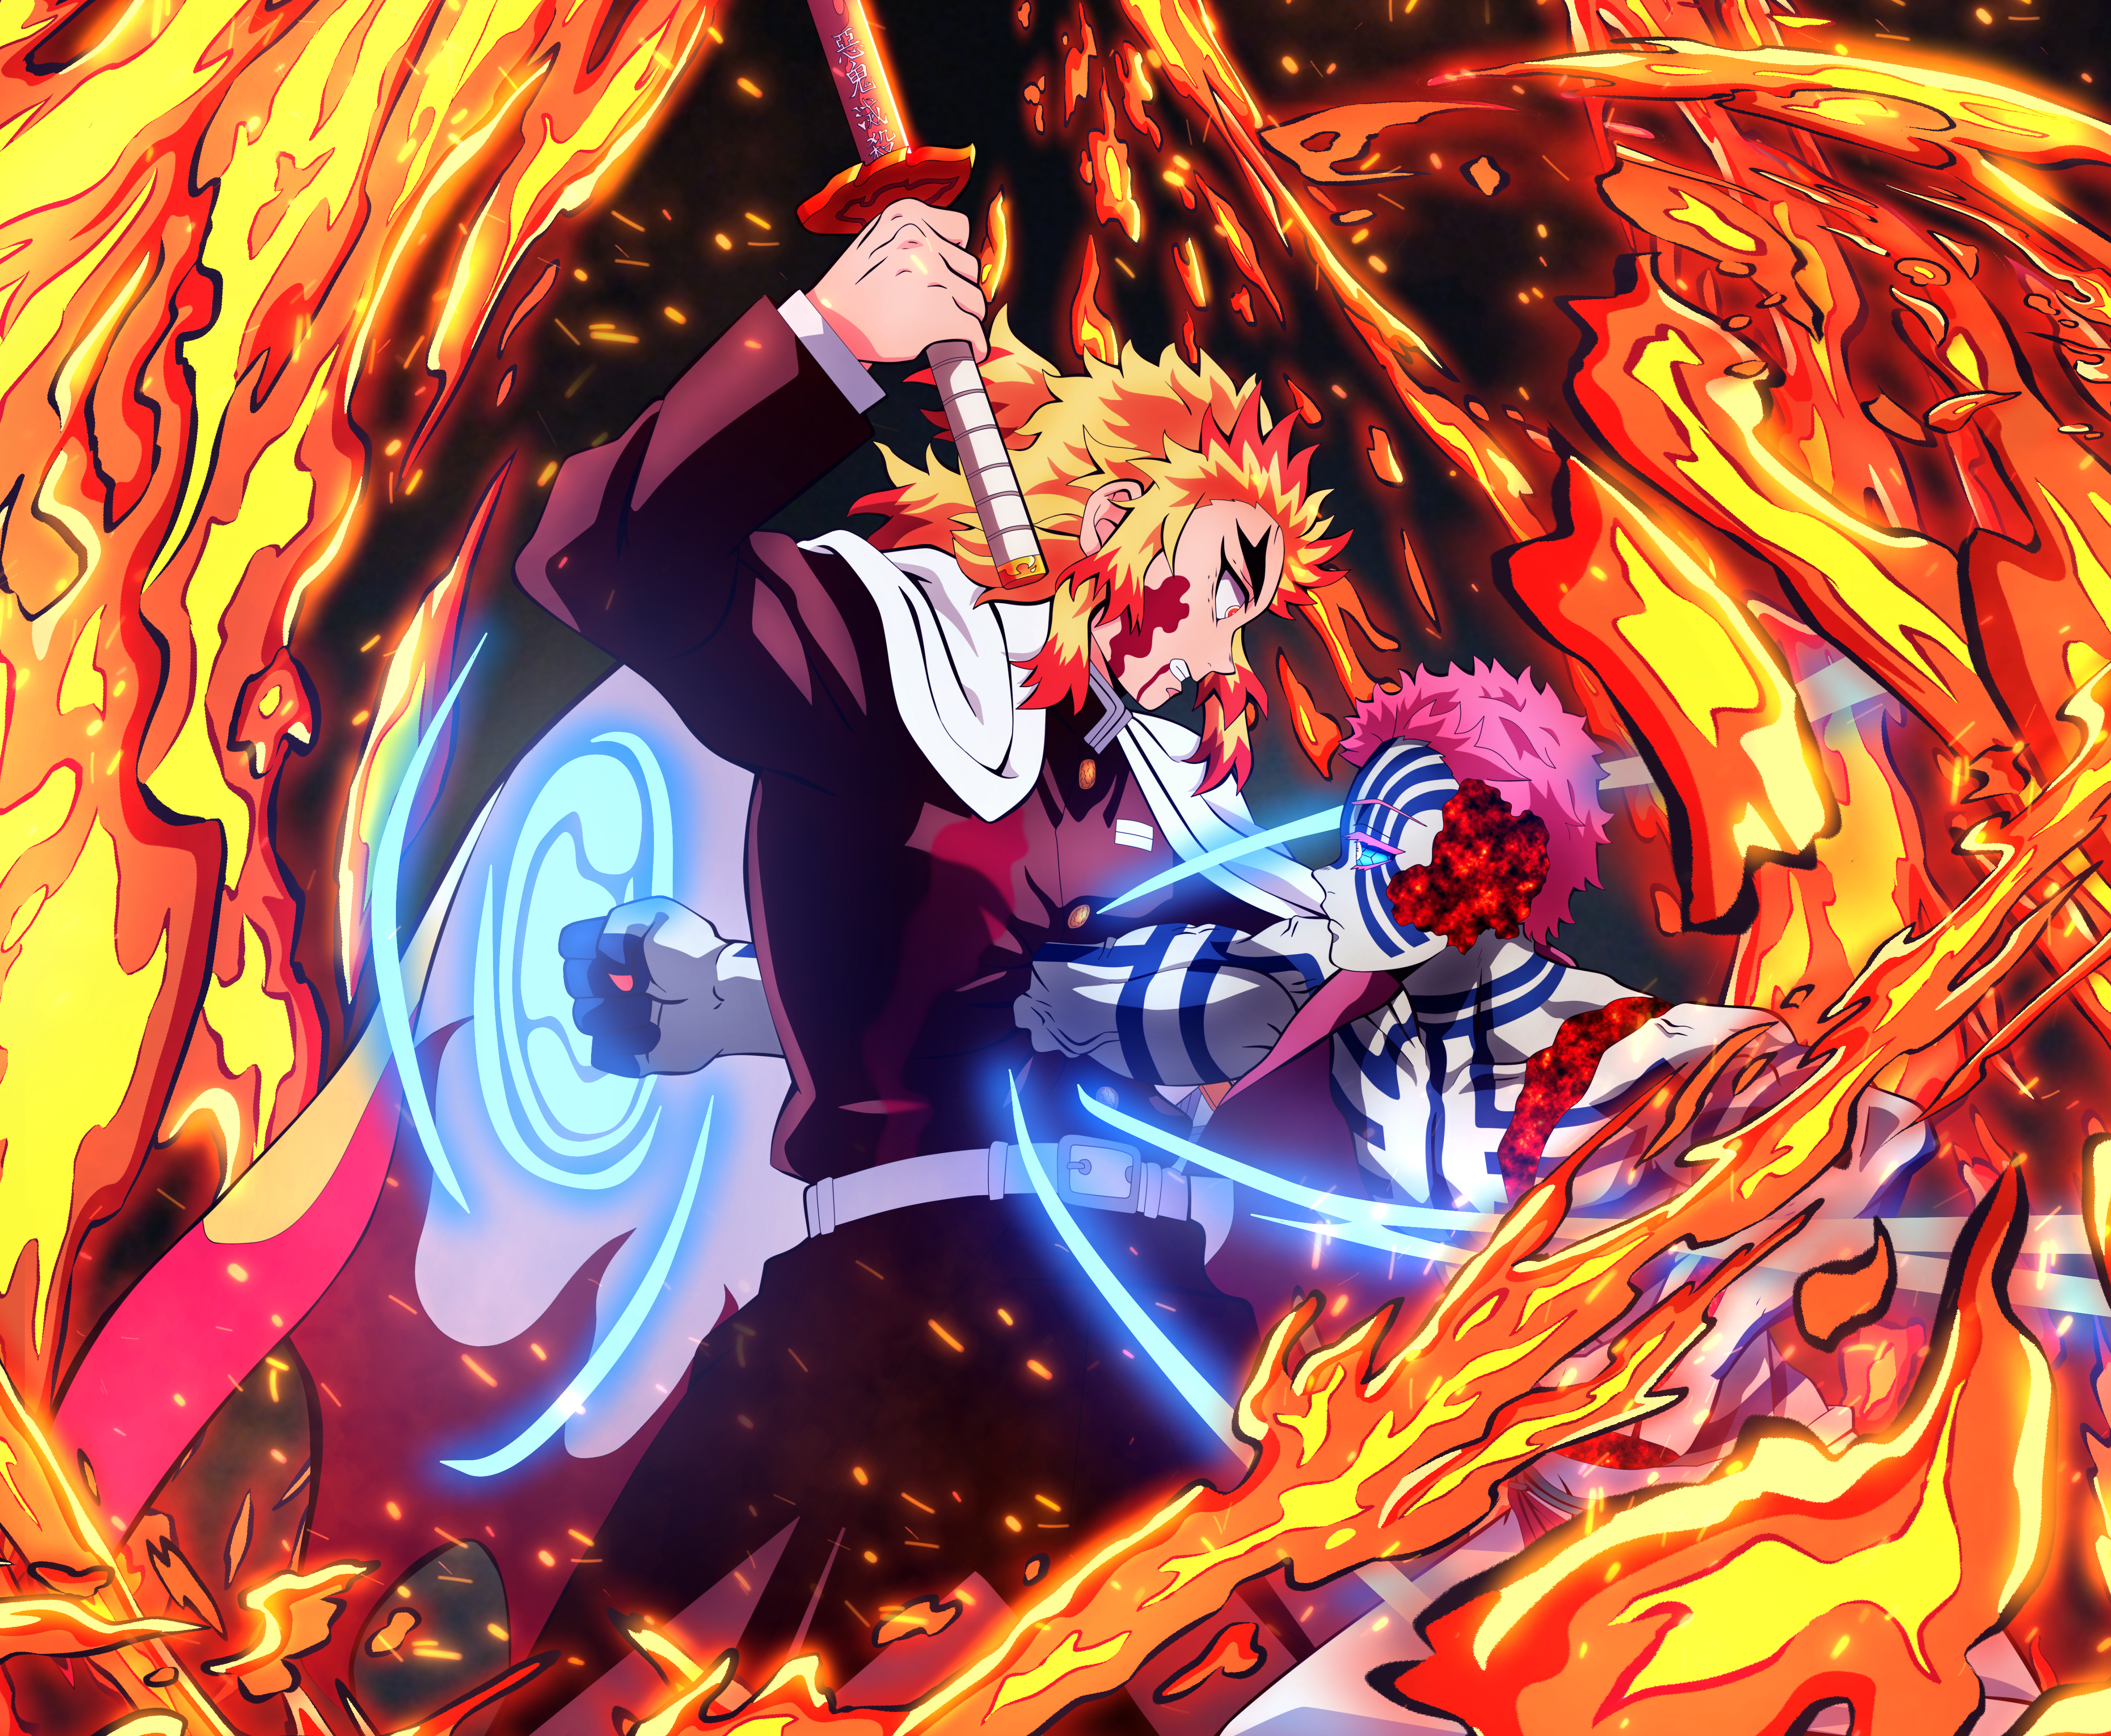 Anime Demon Slayer: Kimetsu no Yaiba 4k Ultra HD Wallpaper by DT501061 余佳軒